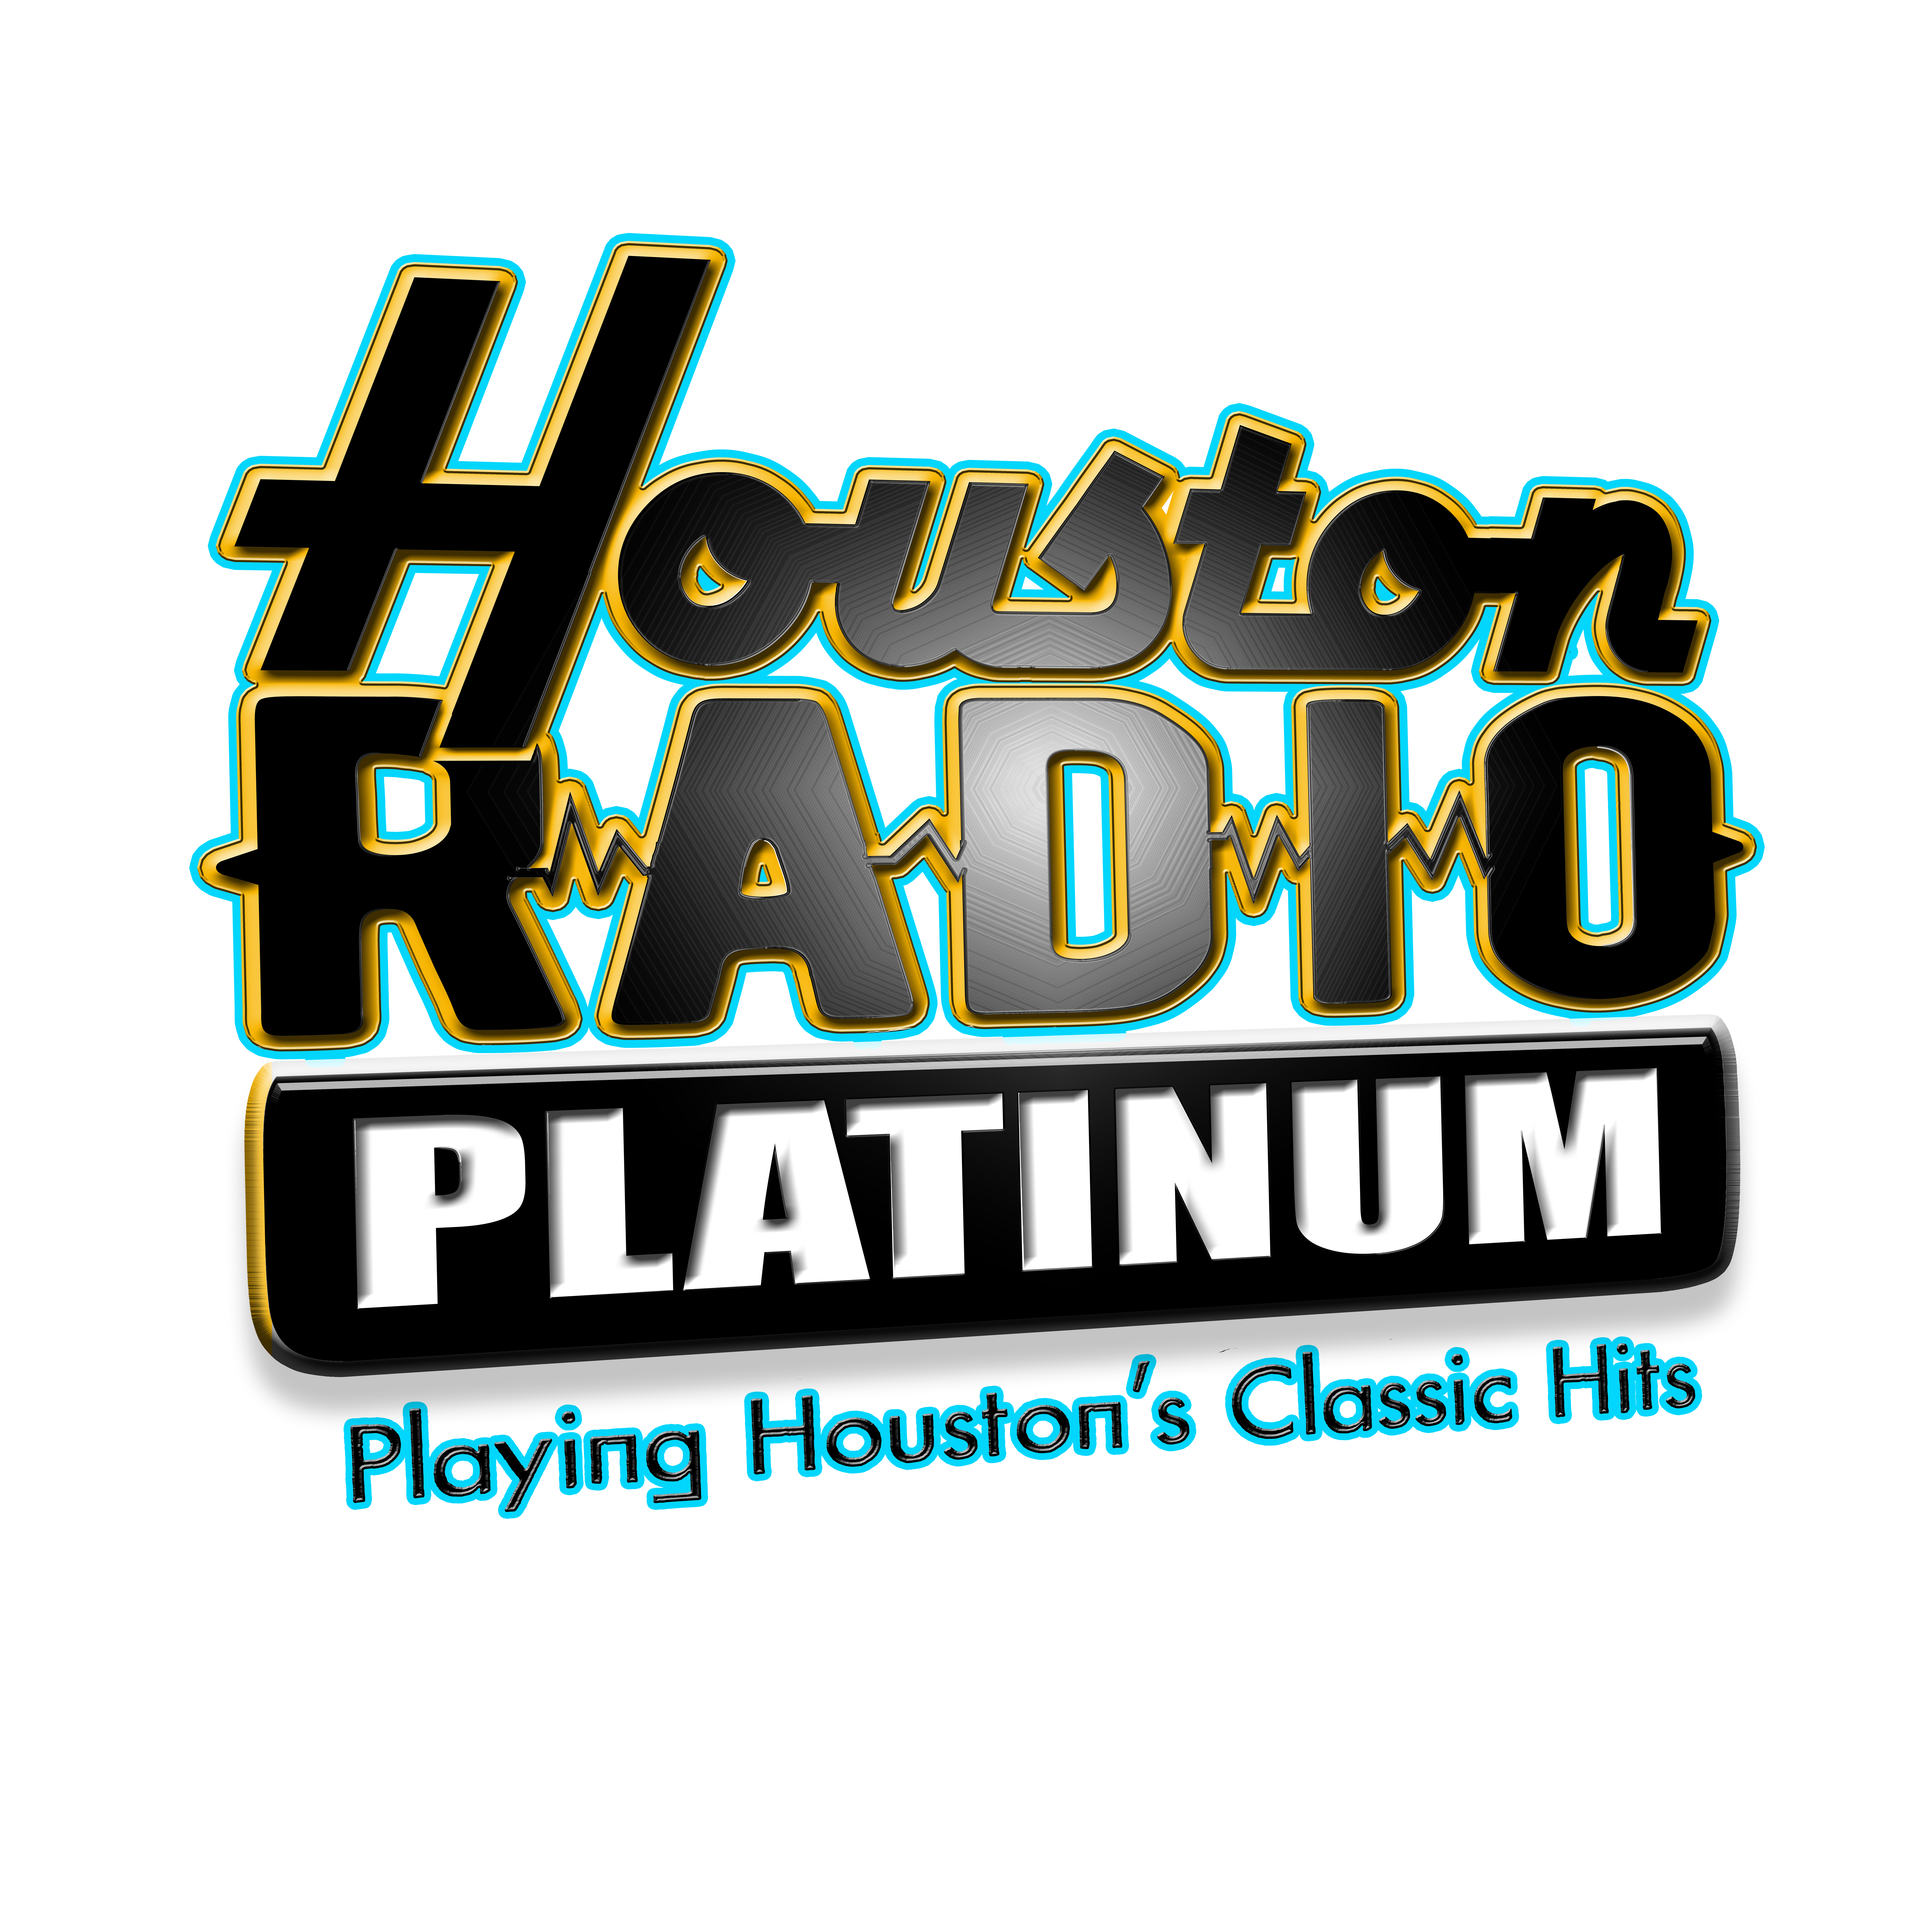 Houston Radio Platinum